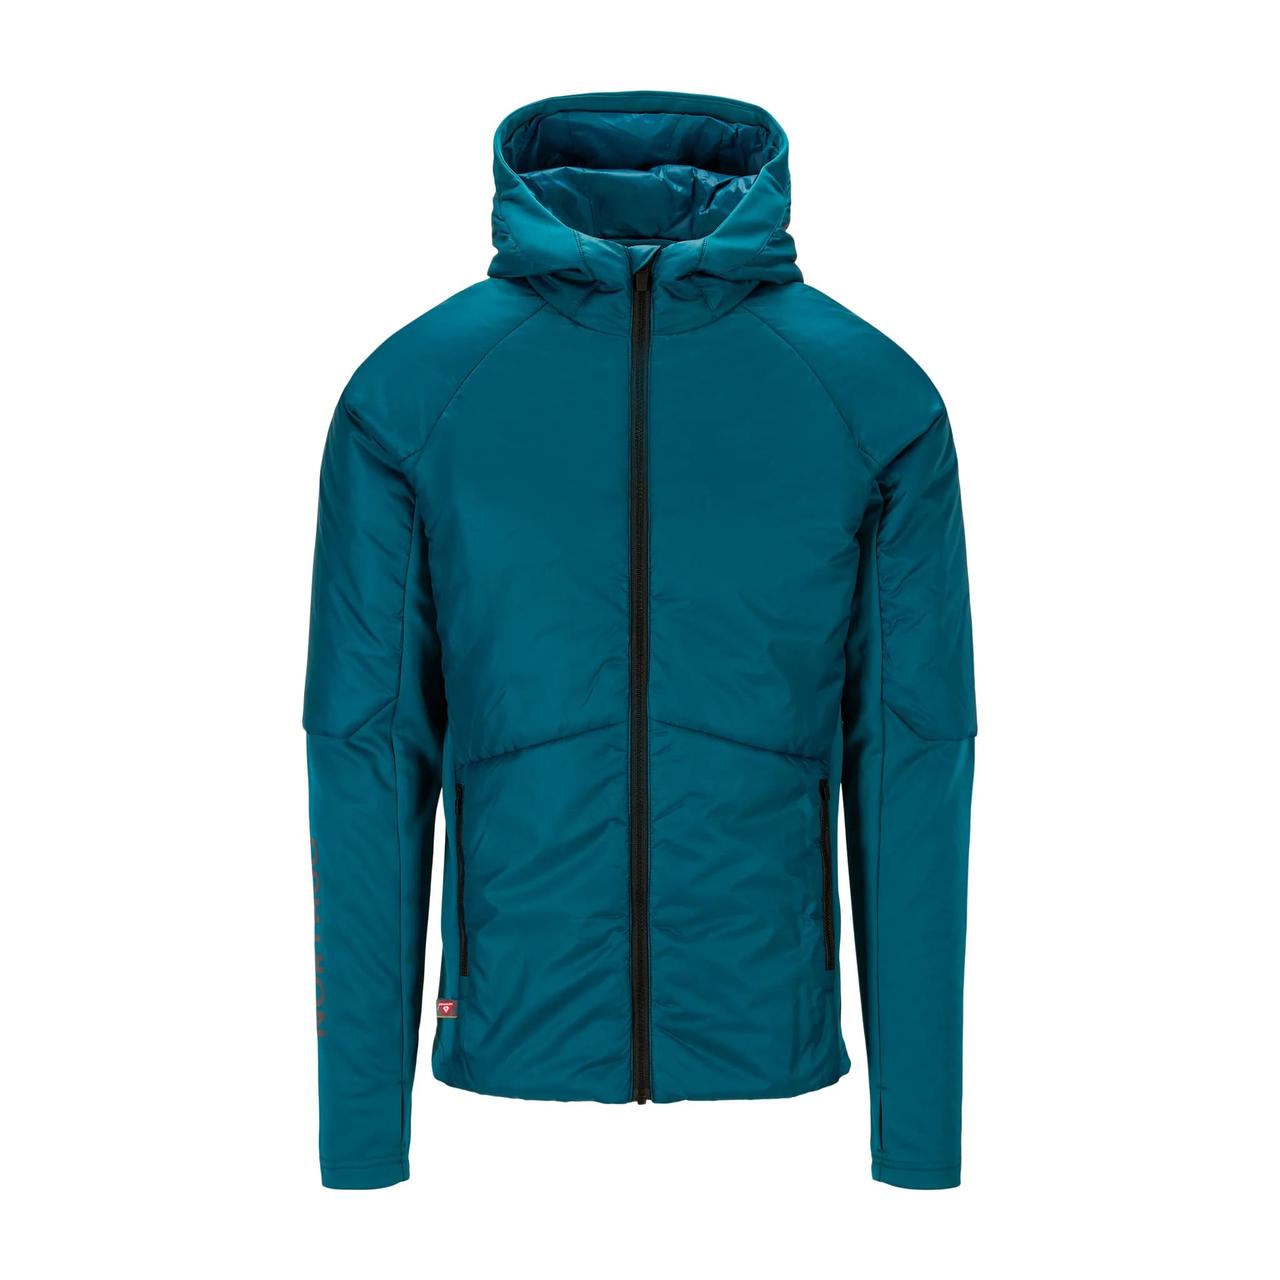 Утеплённая куртка LIVIGNO Hybrid Men, Синий Коралл